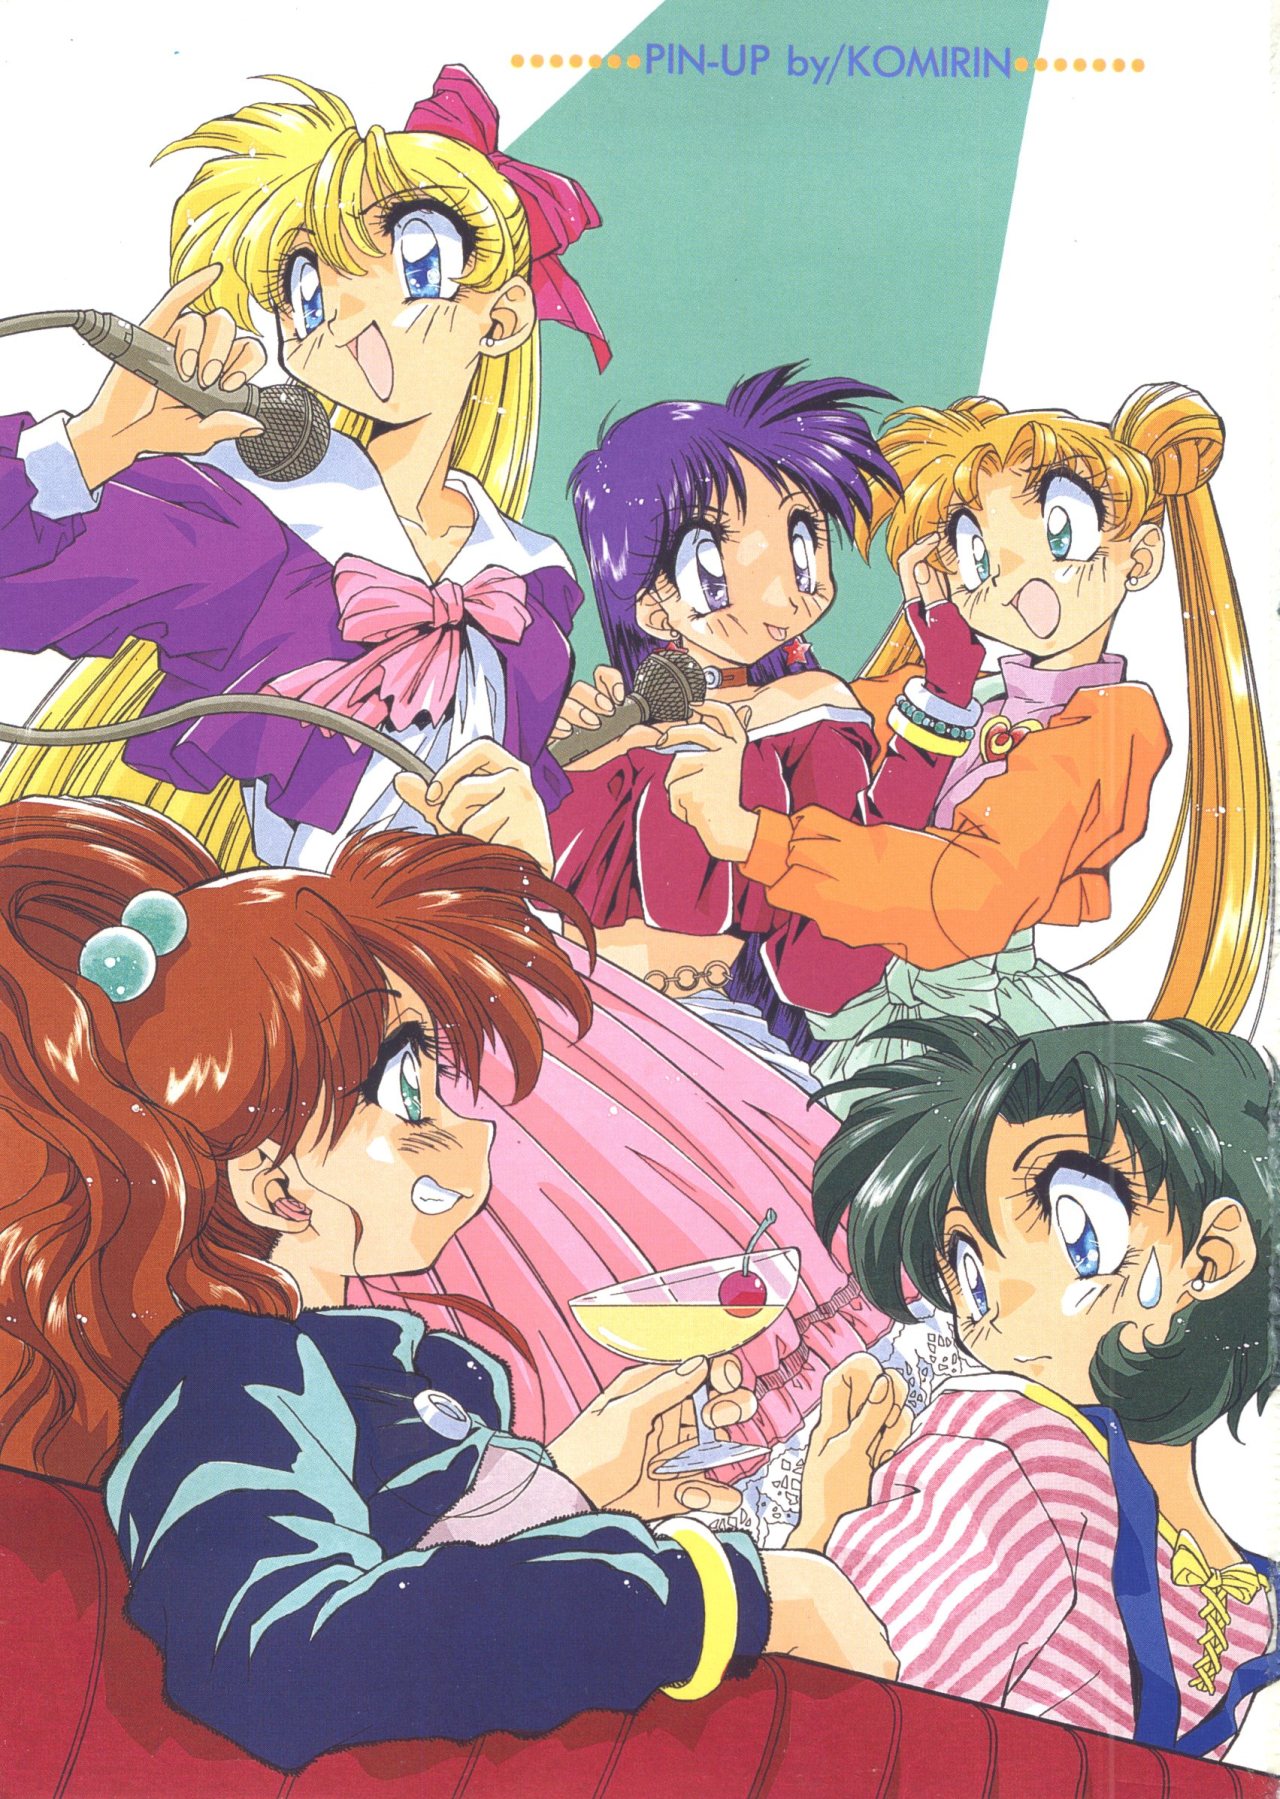 hakonohanayome:
“Komirin in Sailor Moon doujinshi “Colorful Moon 6″
”